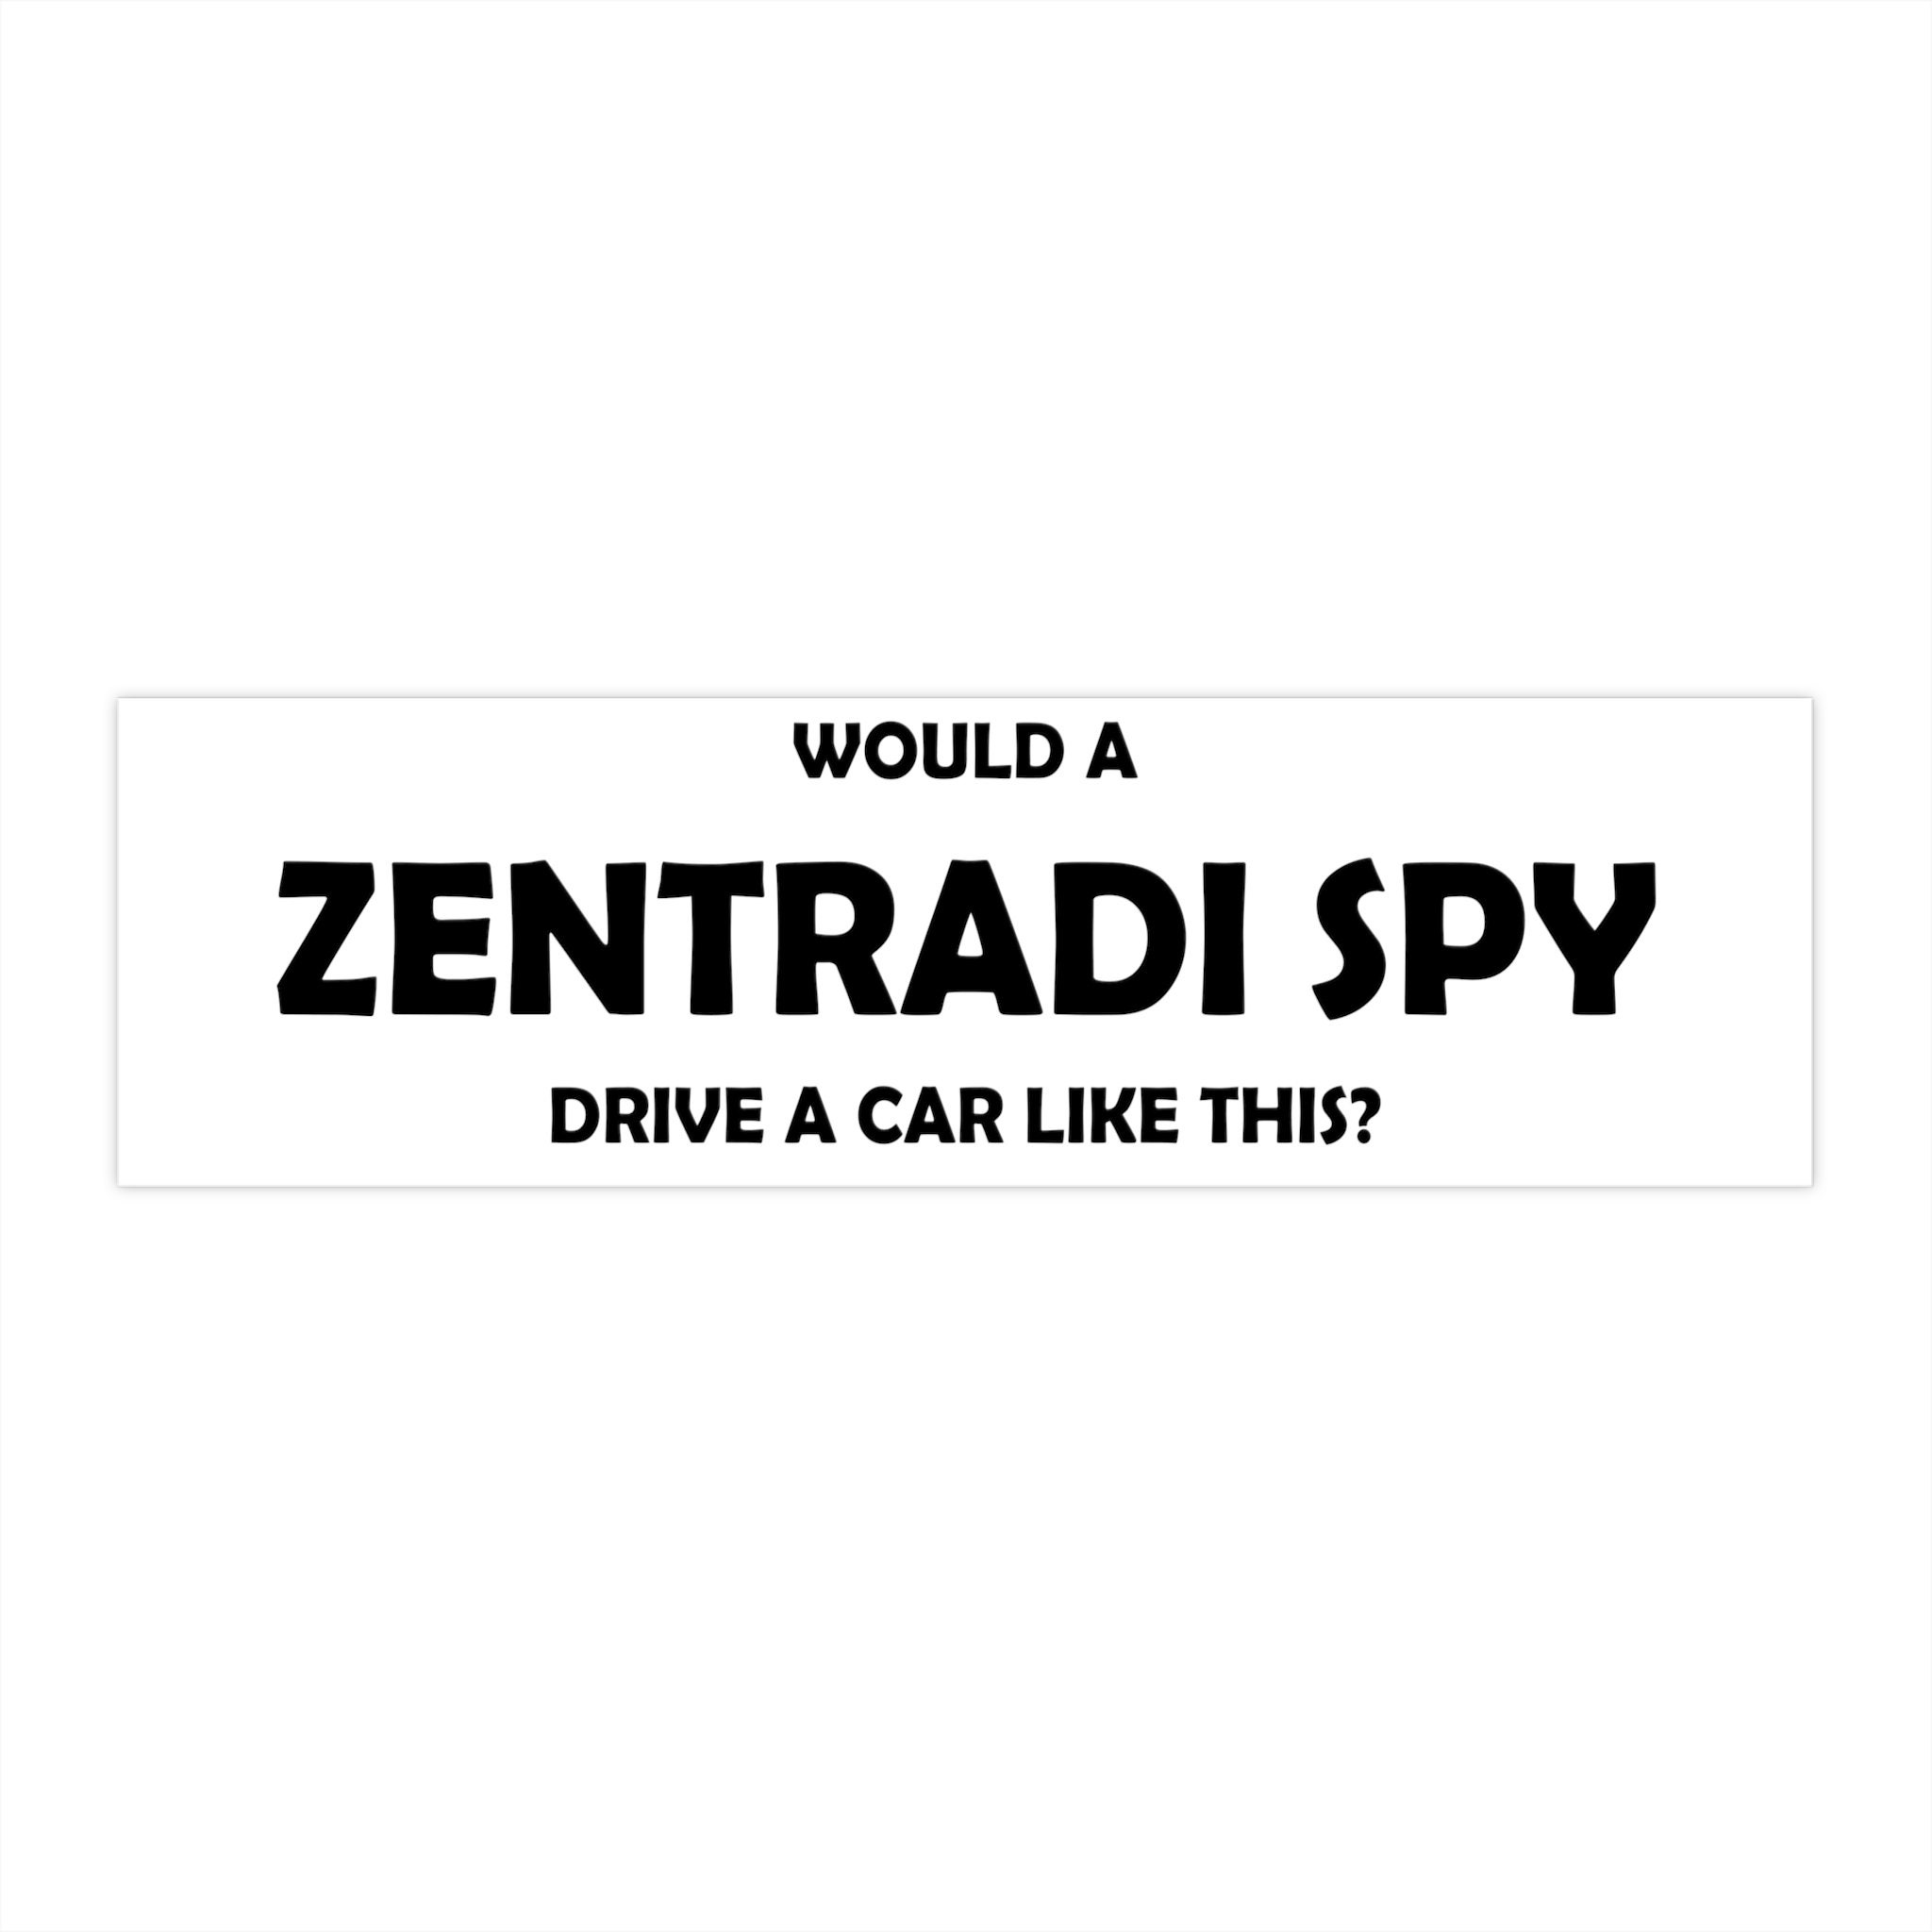 Zentradi